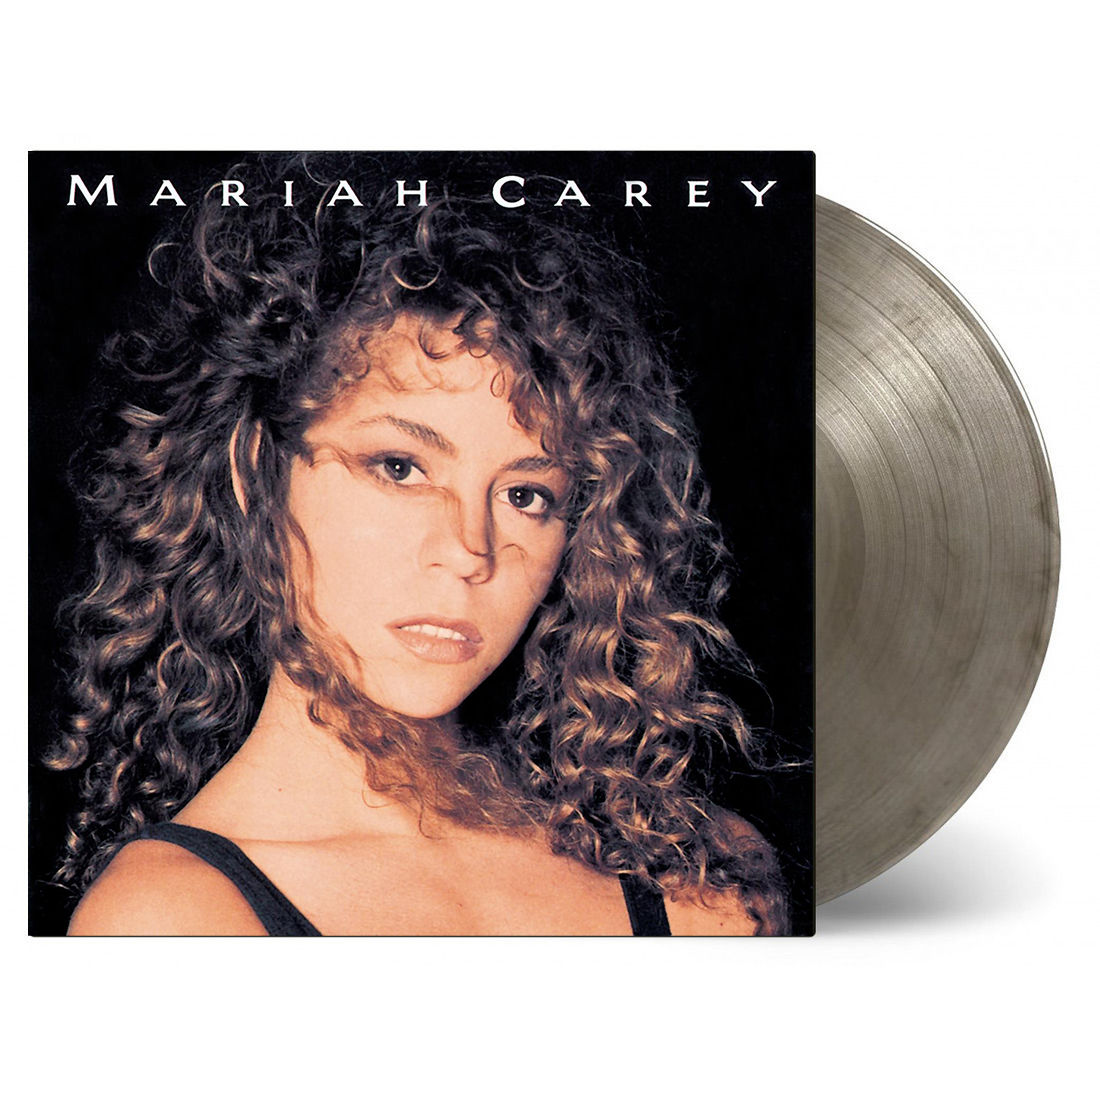 Mariah Carey - Mariah Carey: Limited Shear Smoke Vinyl LP [NAD22]